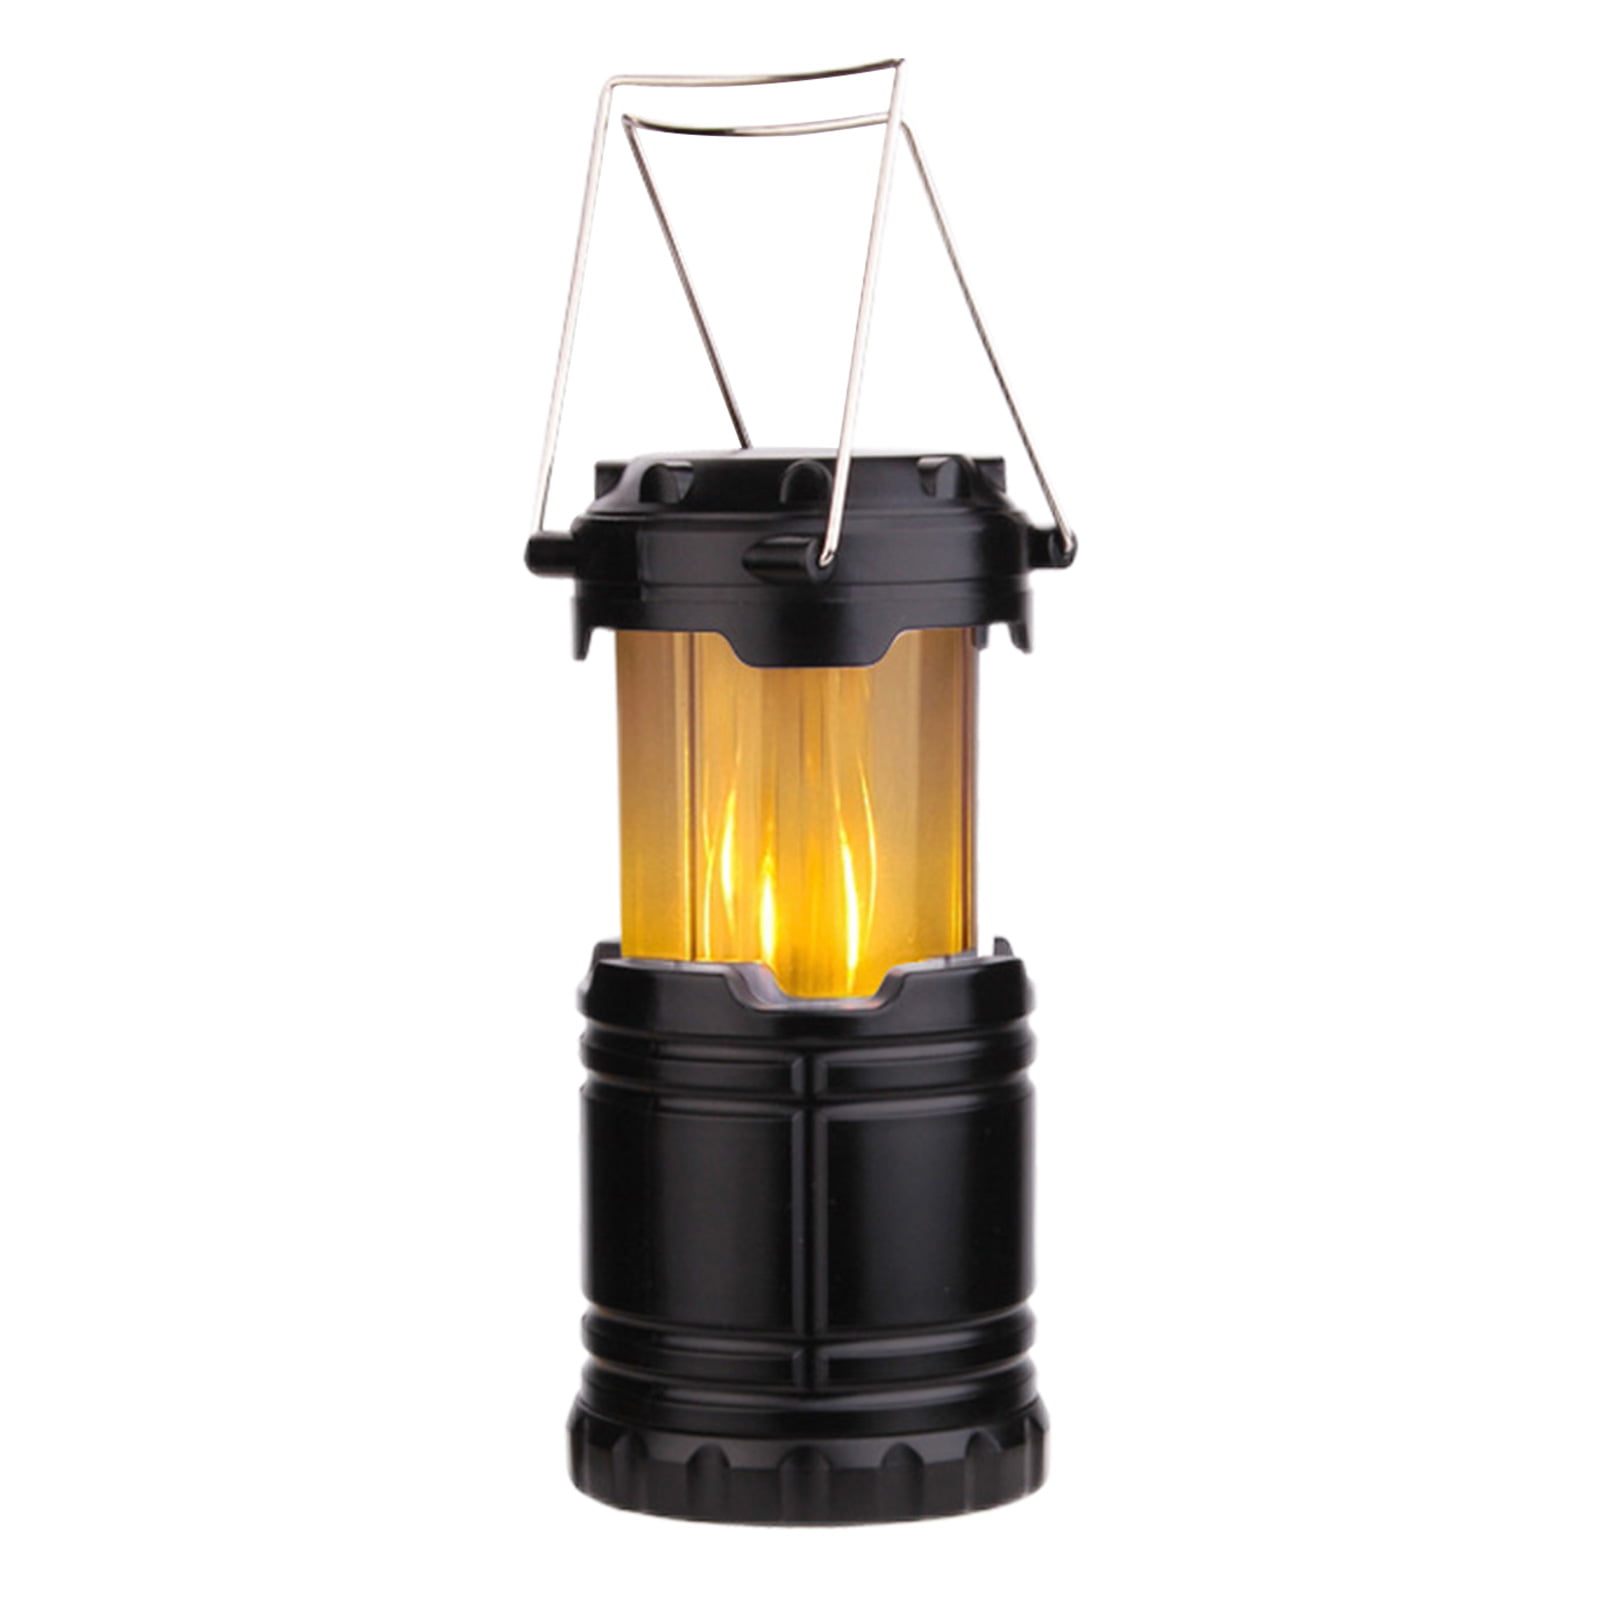 Hurricane Lantern 2500lm Tent Lamp for Outdoor - Hokolite 3 Pack (Save